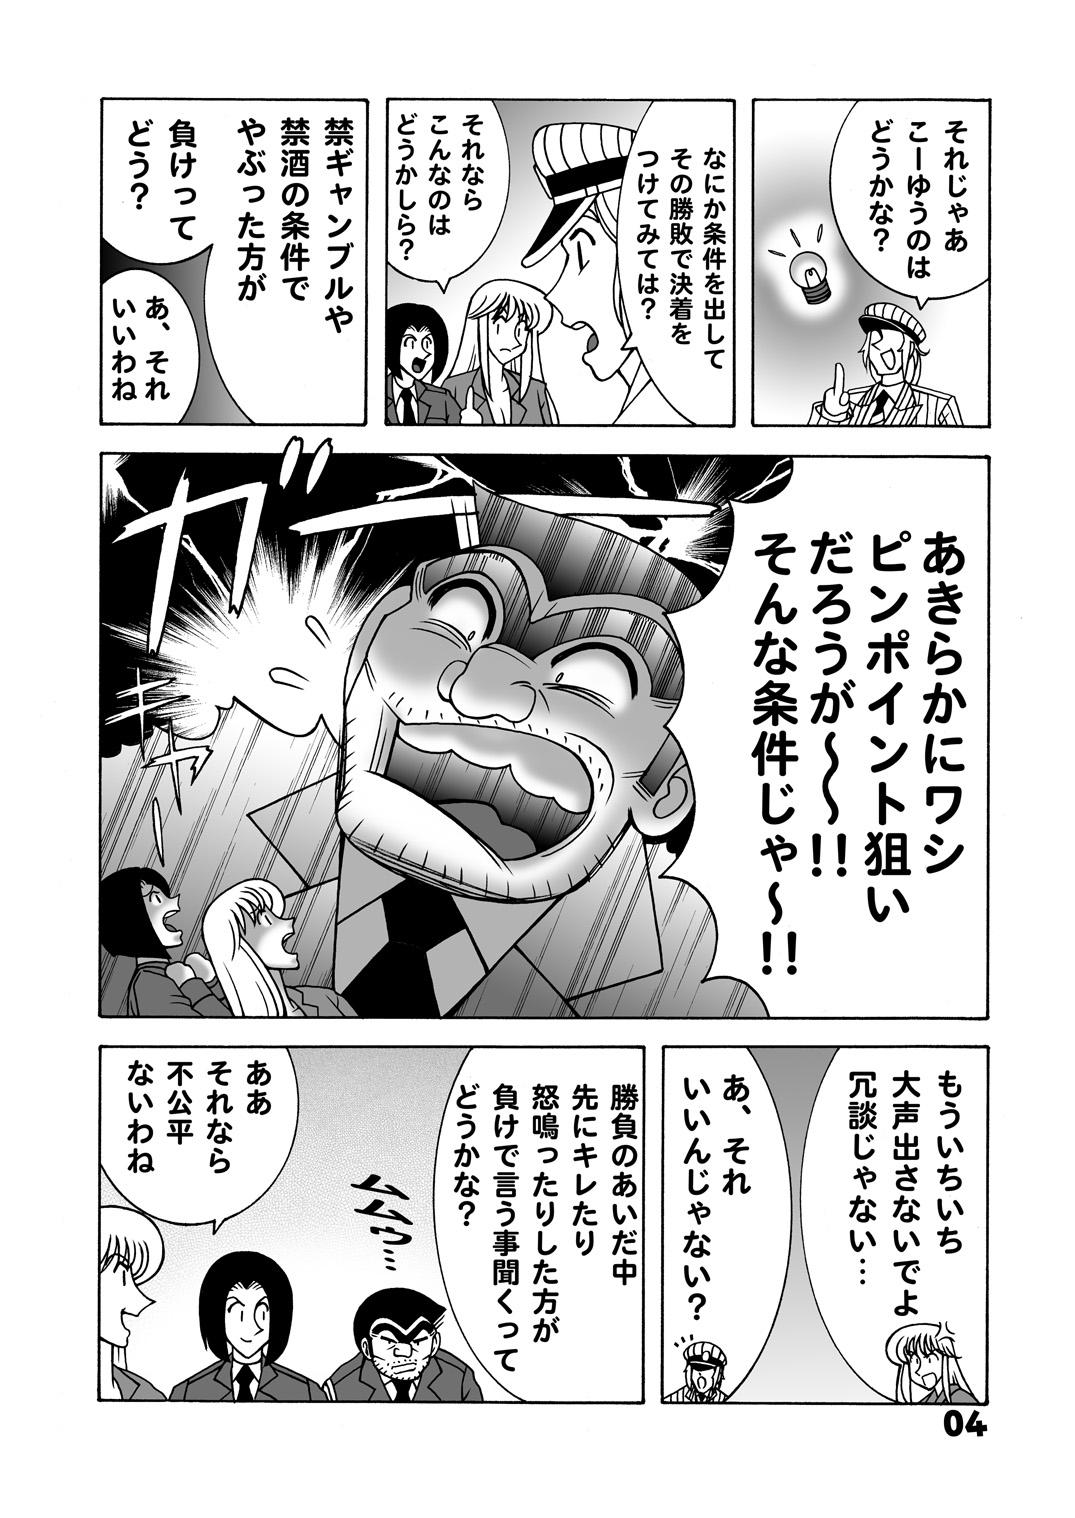 Mainichi Kochikame Dynamite vol.1 3